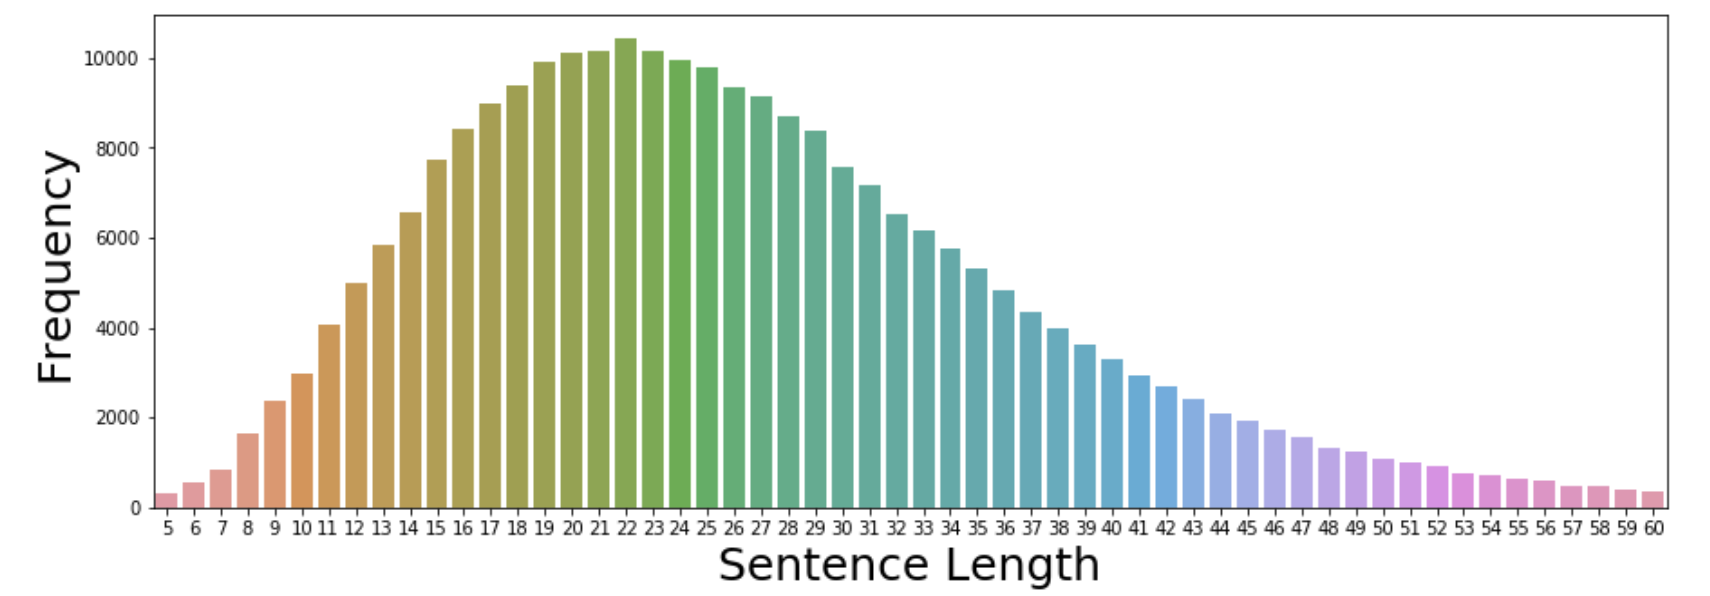 sentence length distrubution